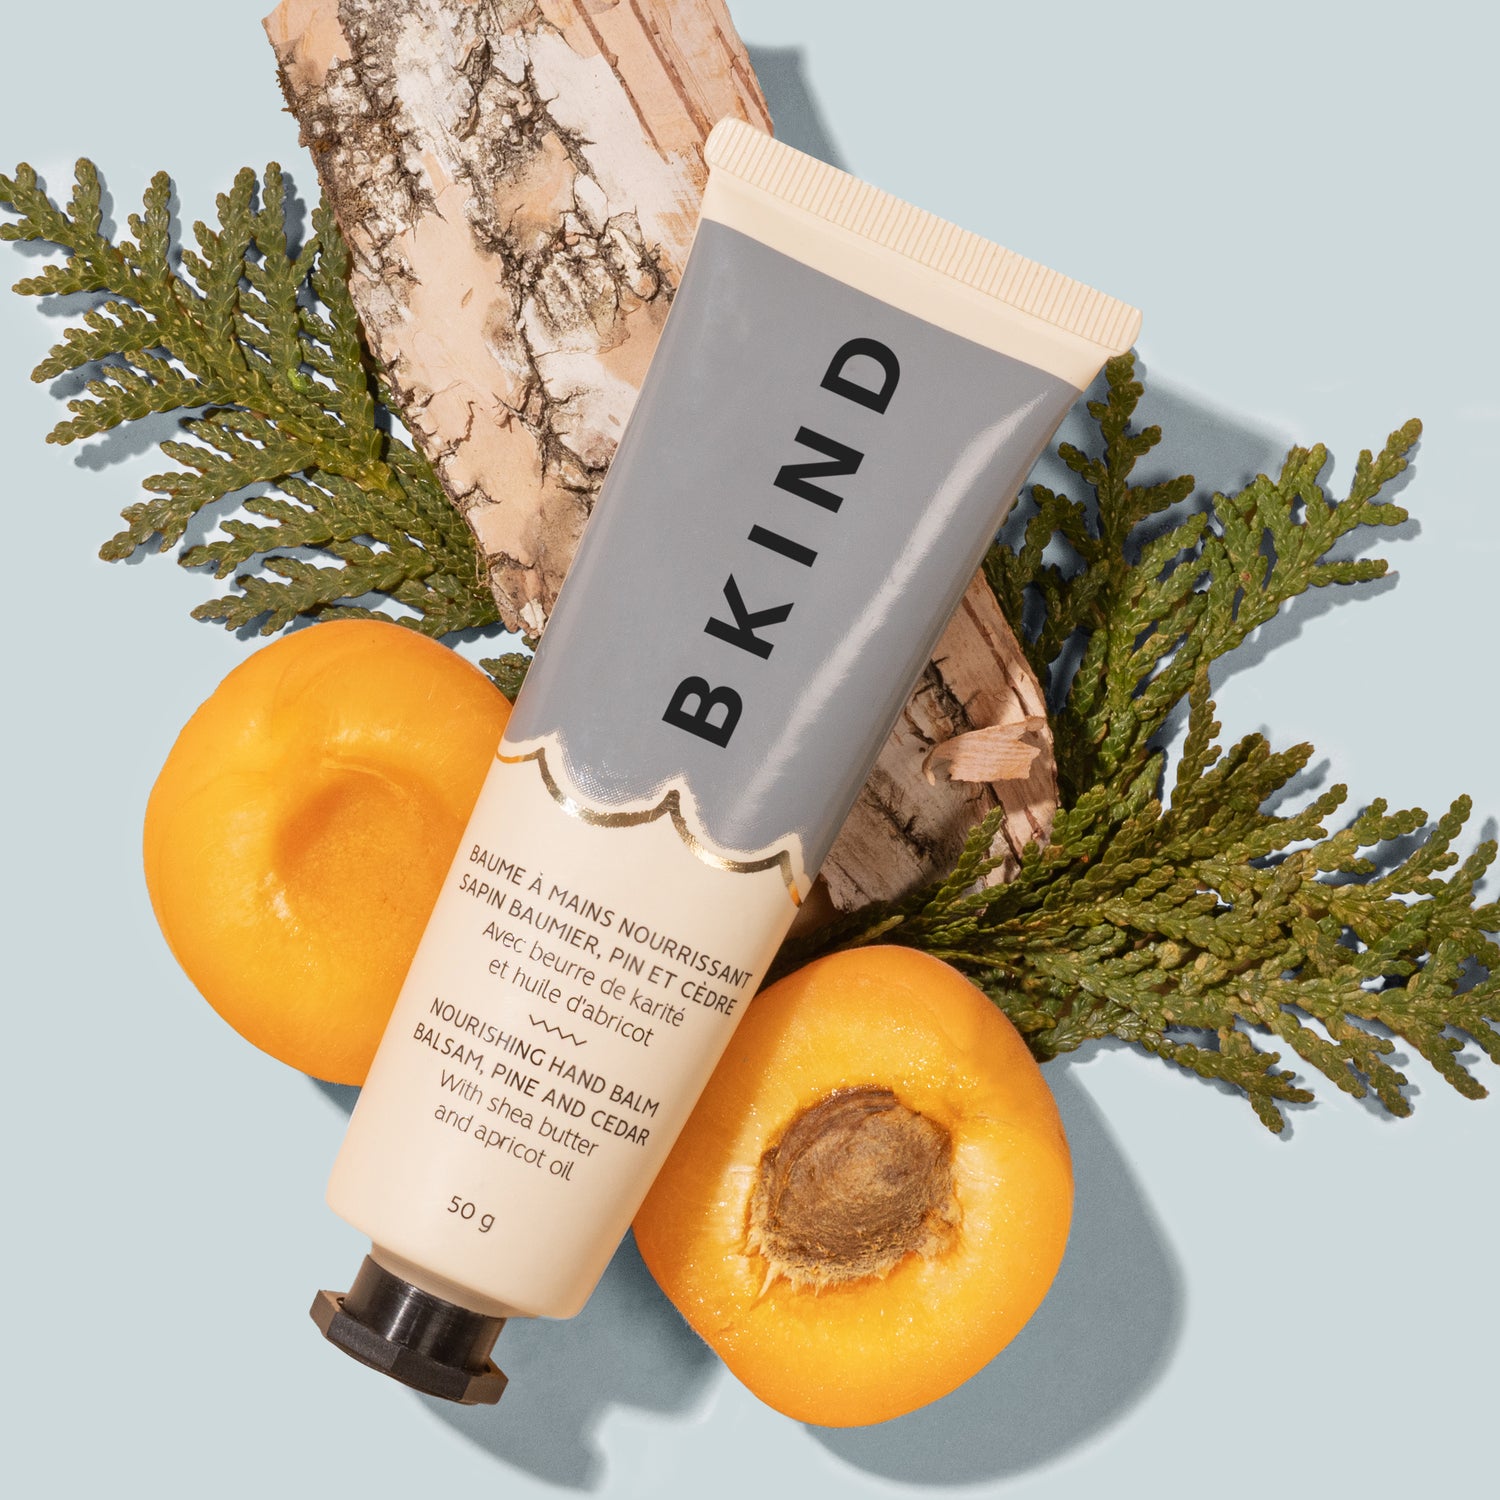 Nourishing hand balm – Pine, cedar and balsam